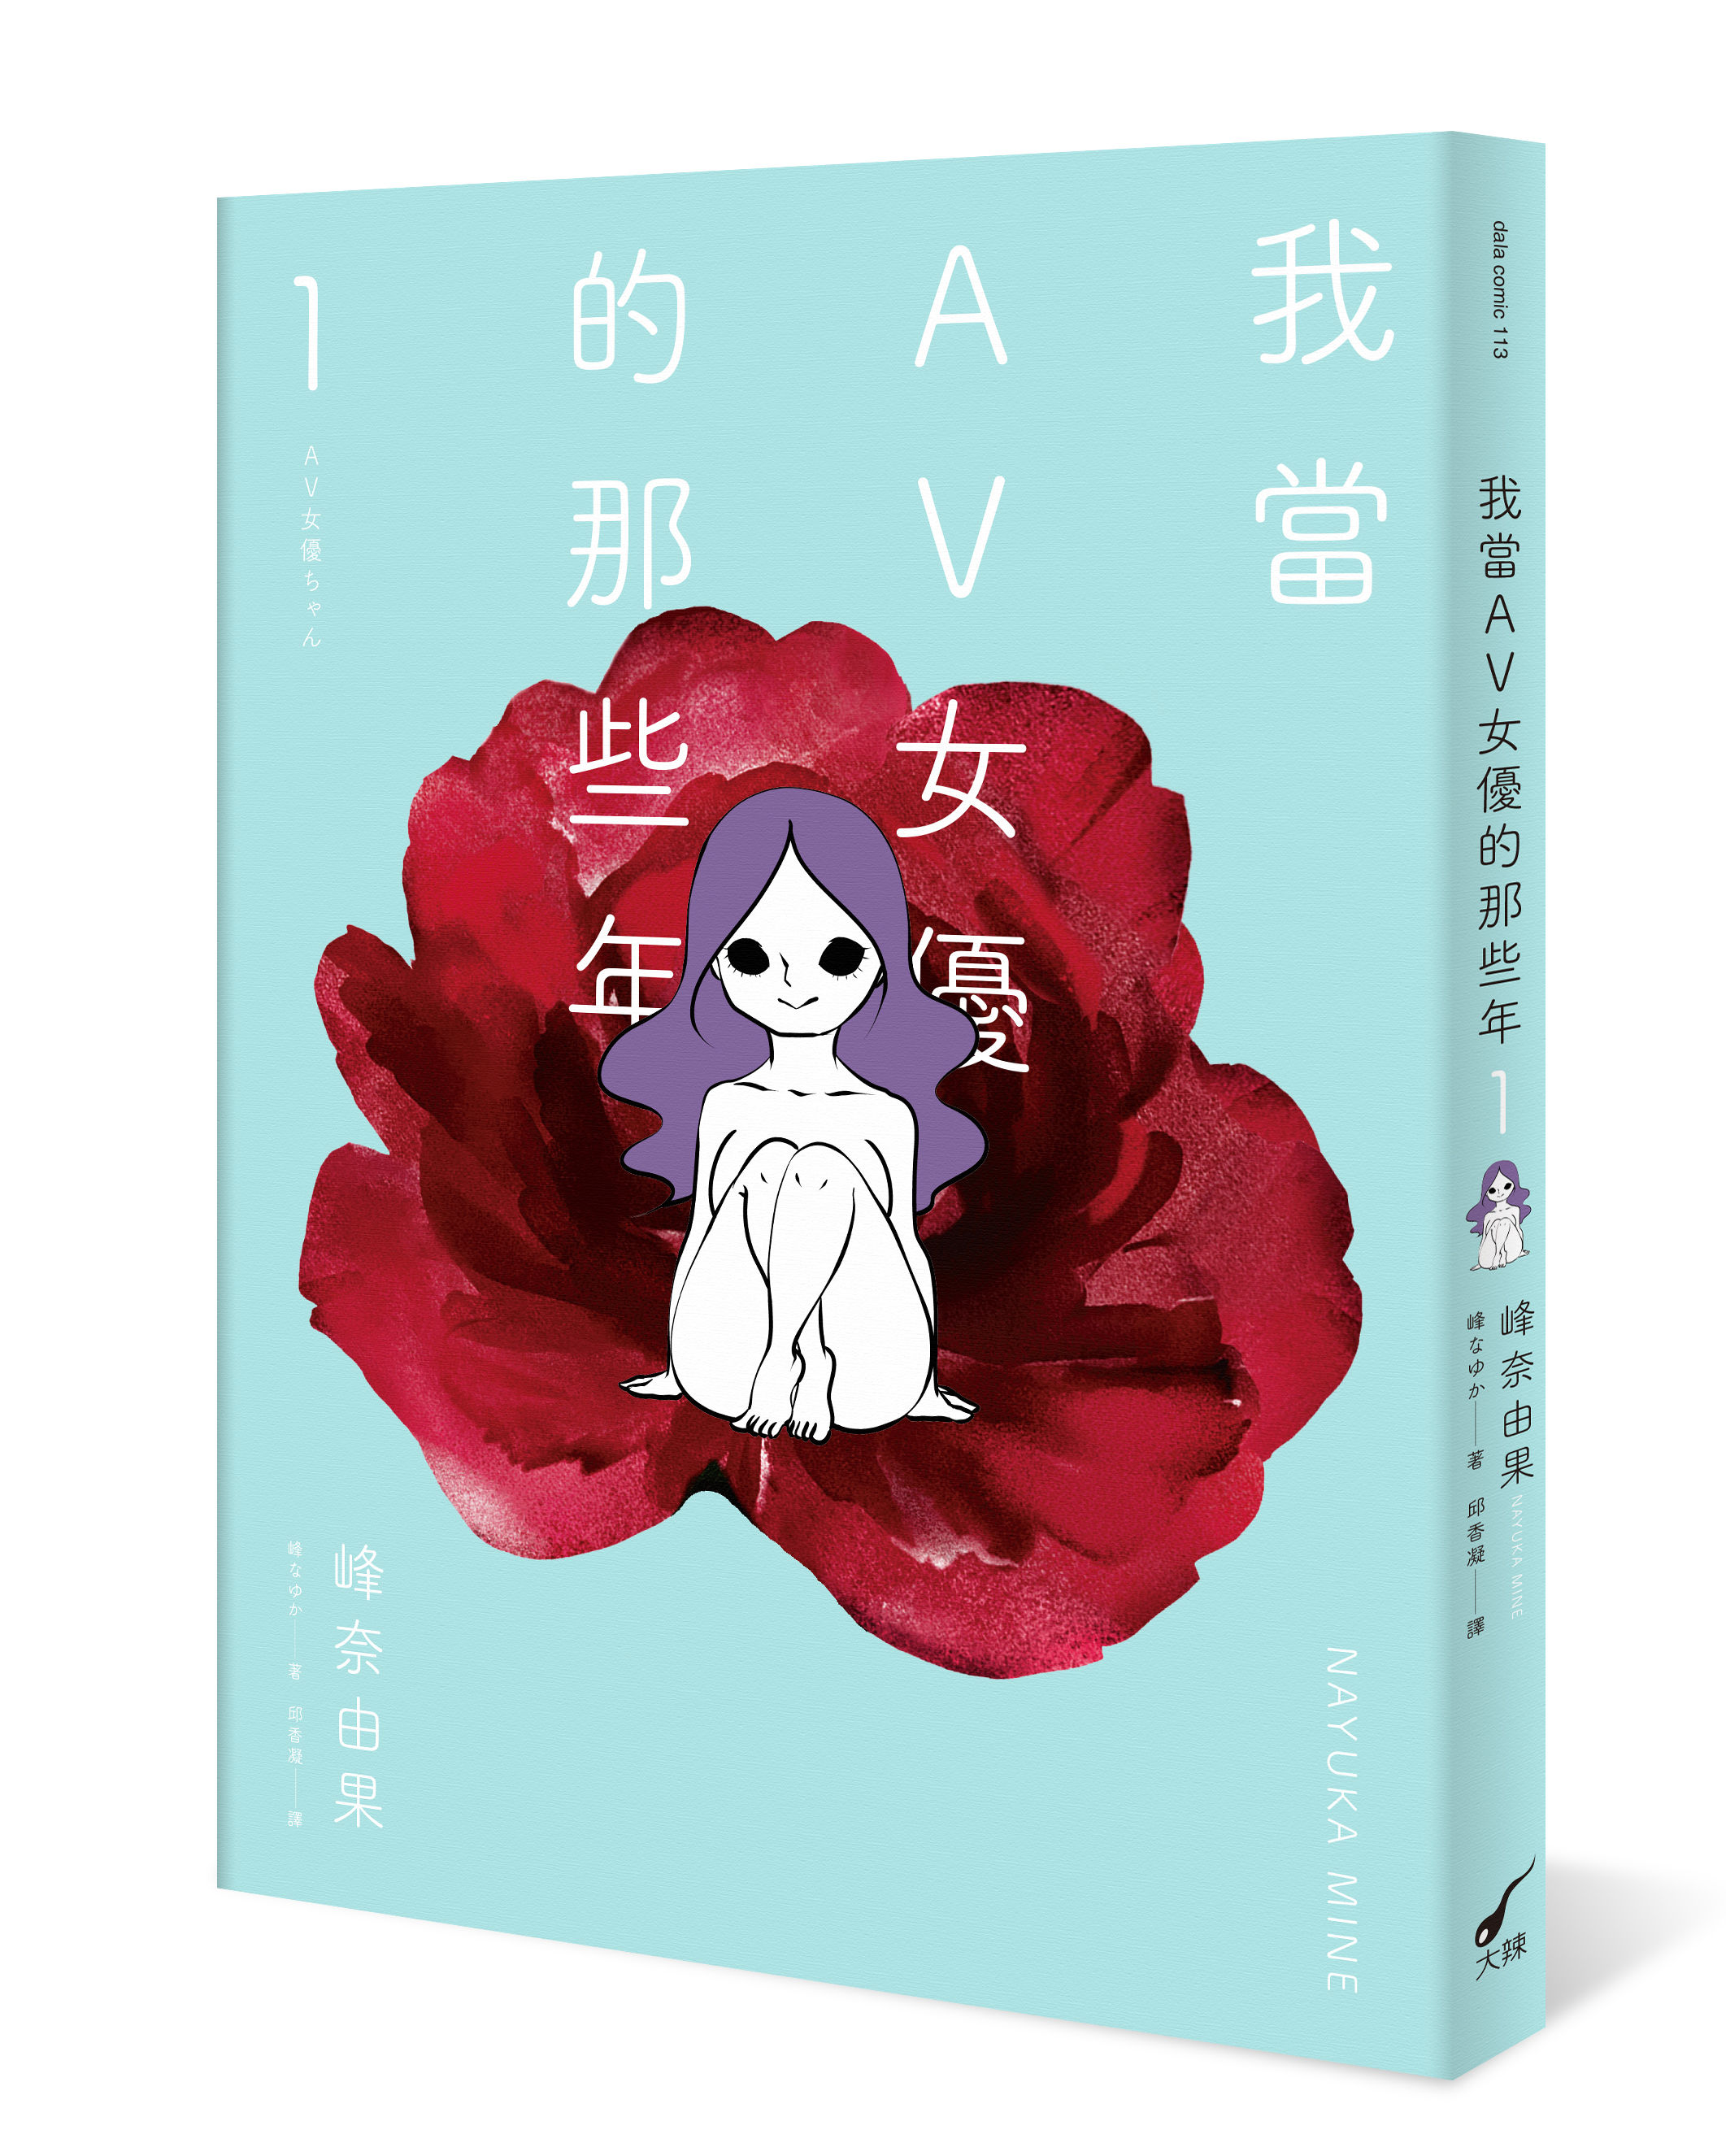 我當AV女優的那些年 2（限制級） 連環漫畫 電子書，作者 峰奈由果 峰なゆか - EPUB 書籍 | Rakuten Kobo 台灣